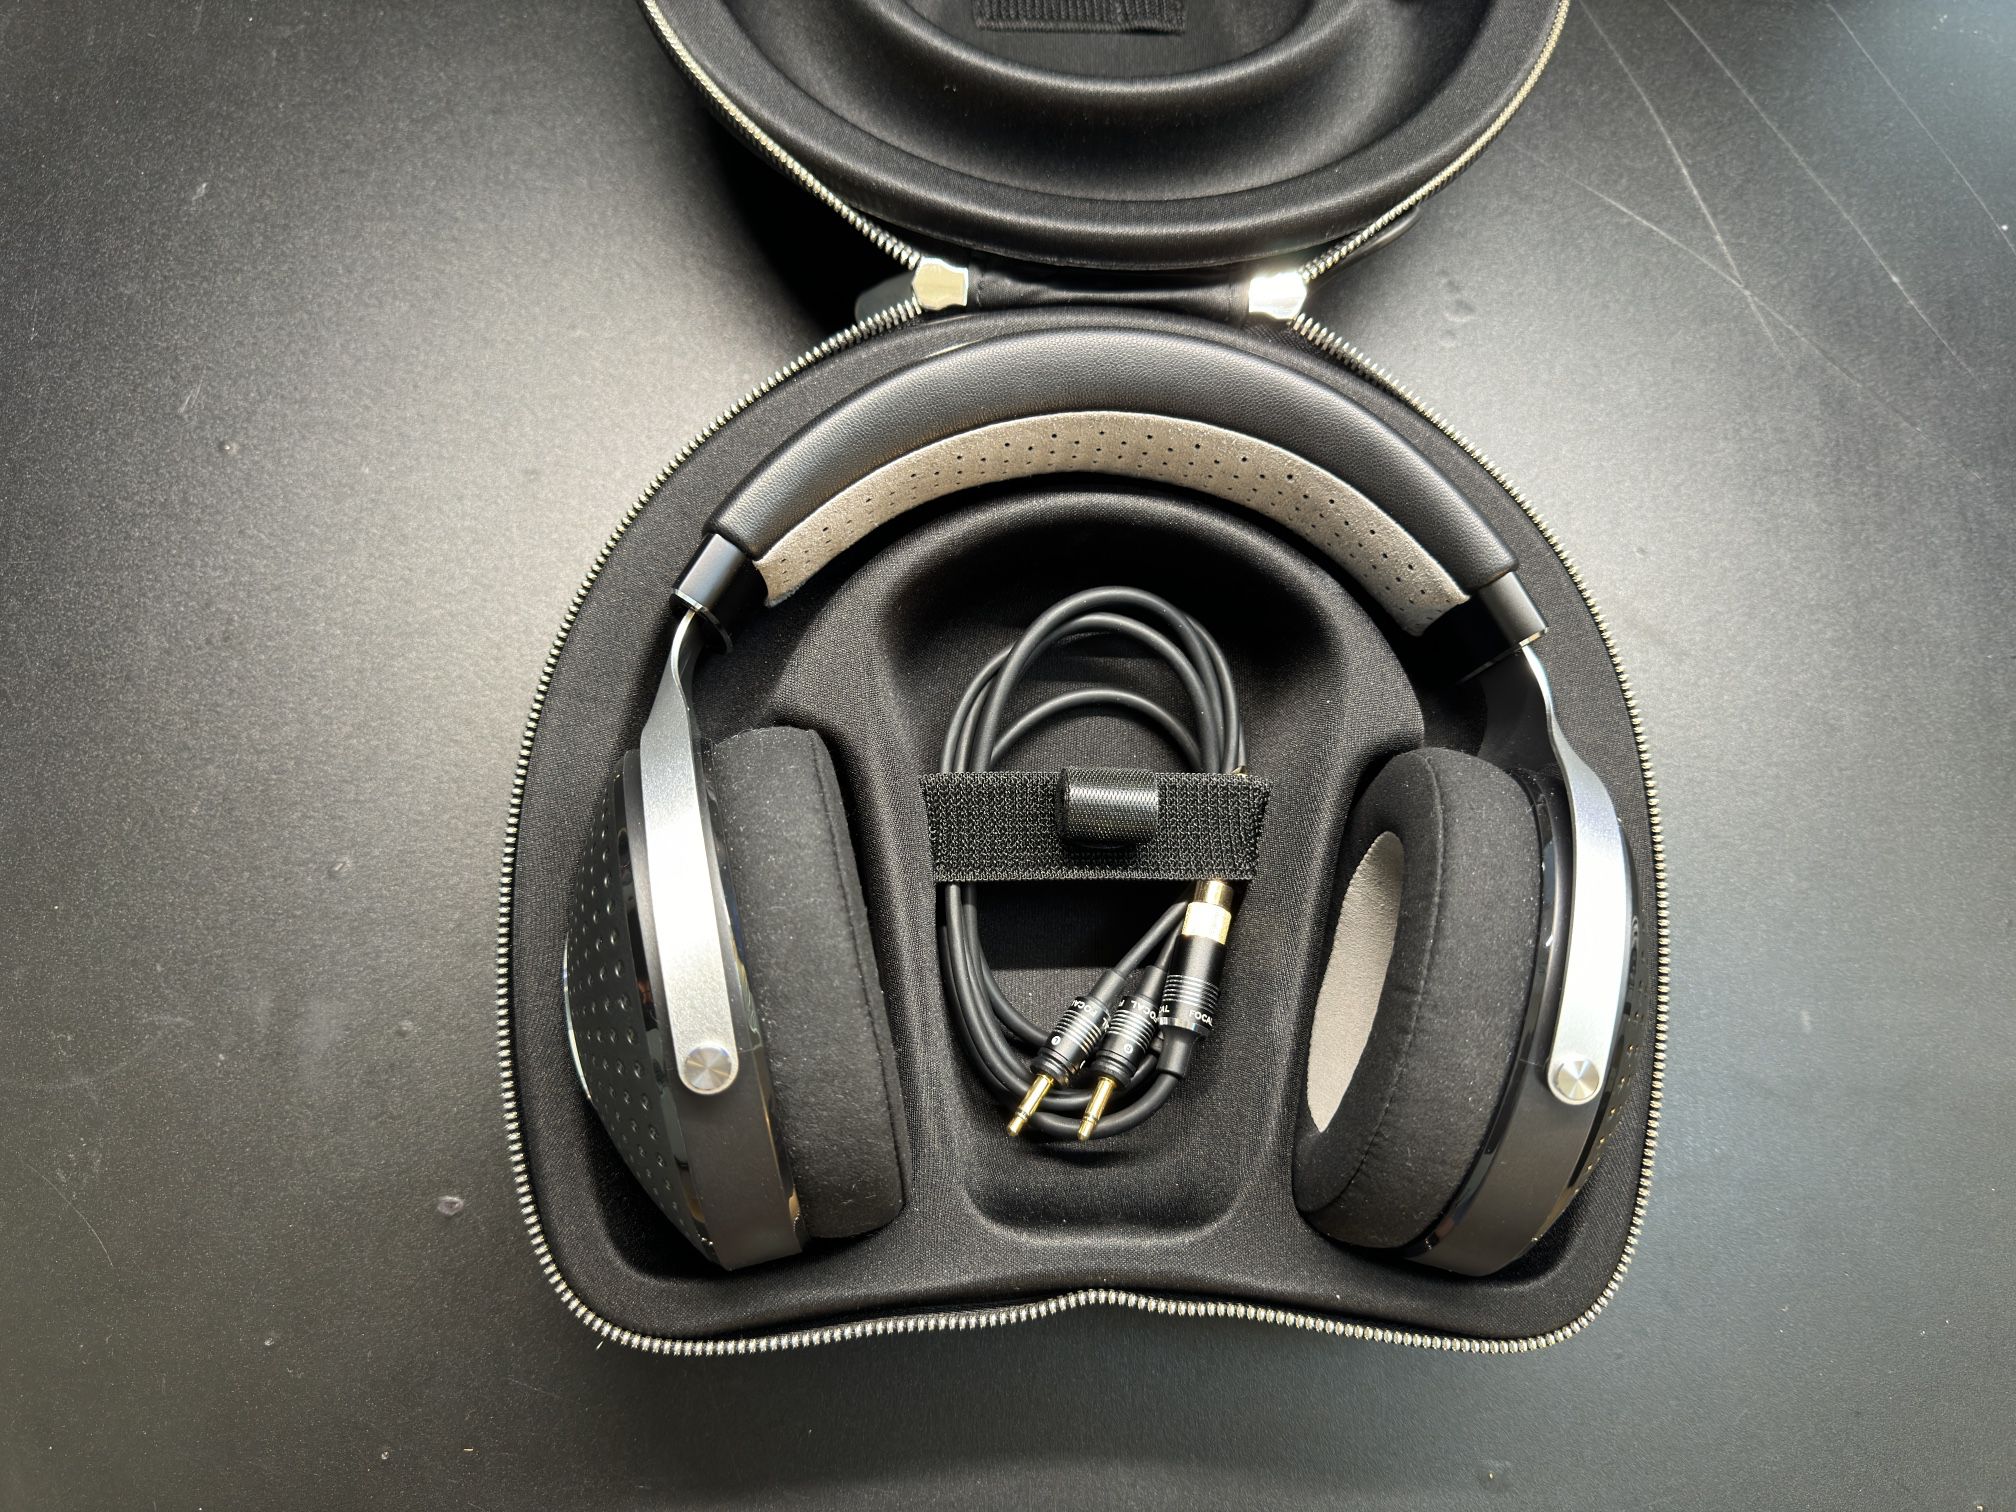 Focal Elegia Closed-Back Wired Headphones